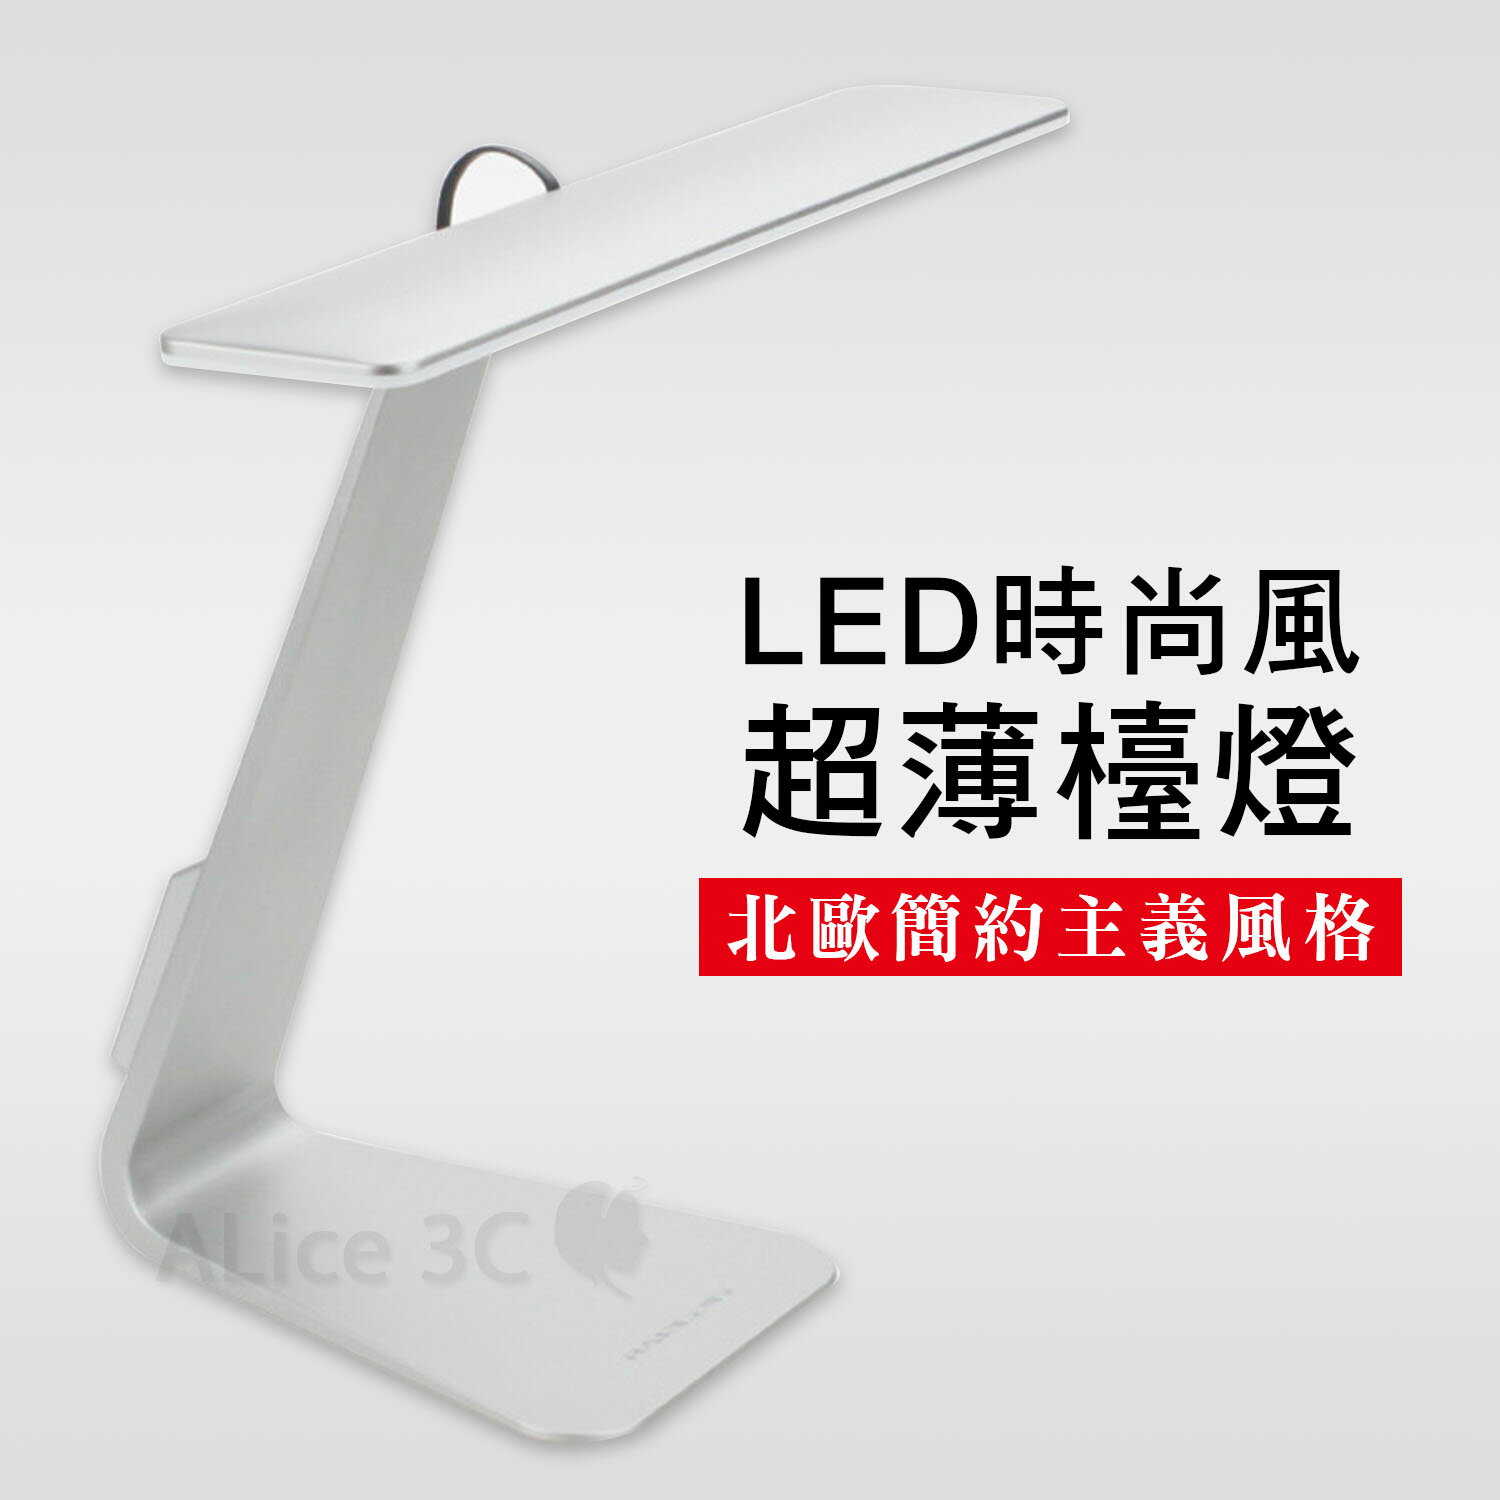 LED 時尚風 超薄檯燈 【E1-013】 可充電式 金屬質感 時尚美學 免接電線 北歐簡約風